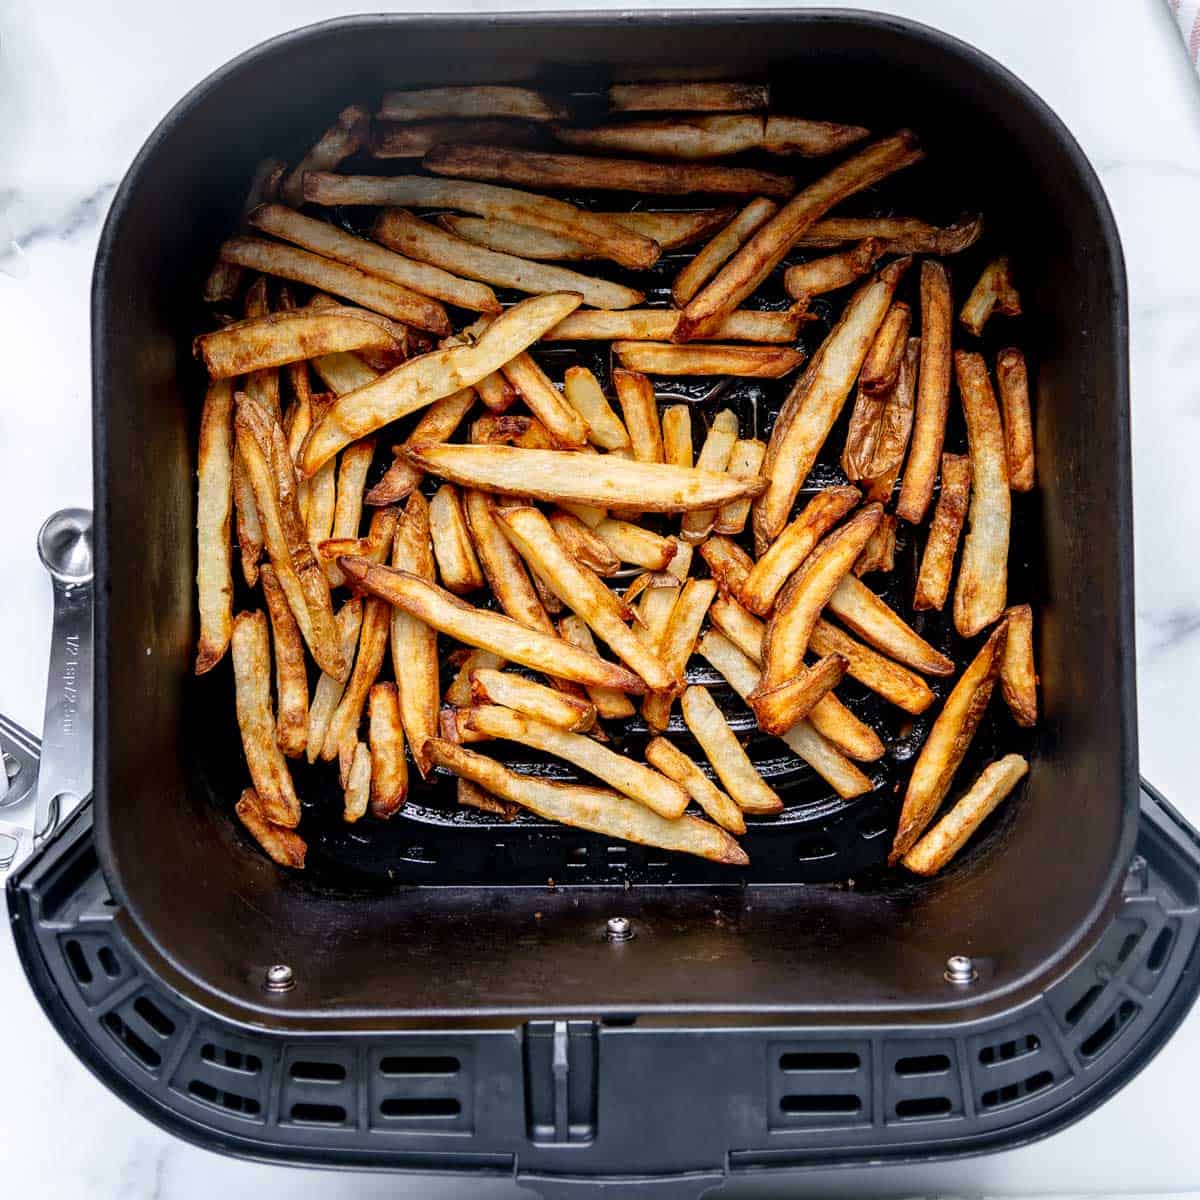 Golden brown fries in the air fryer basket.